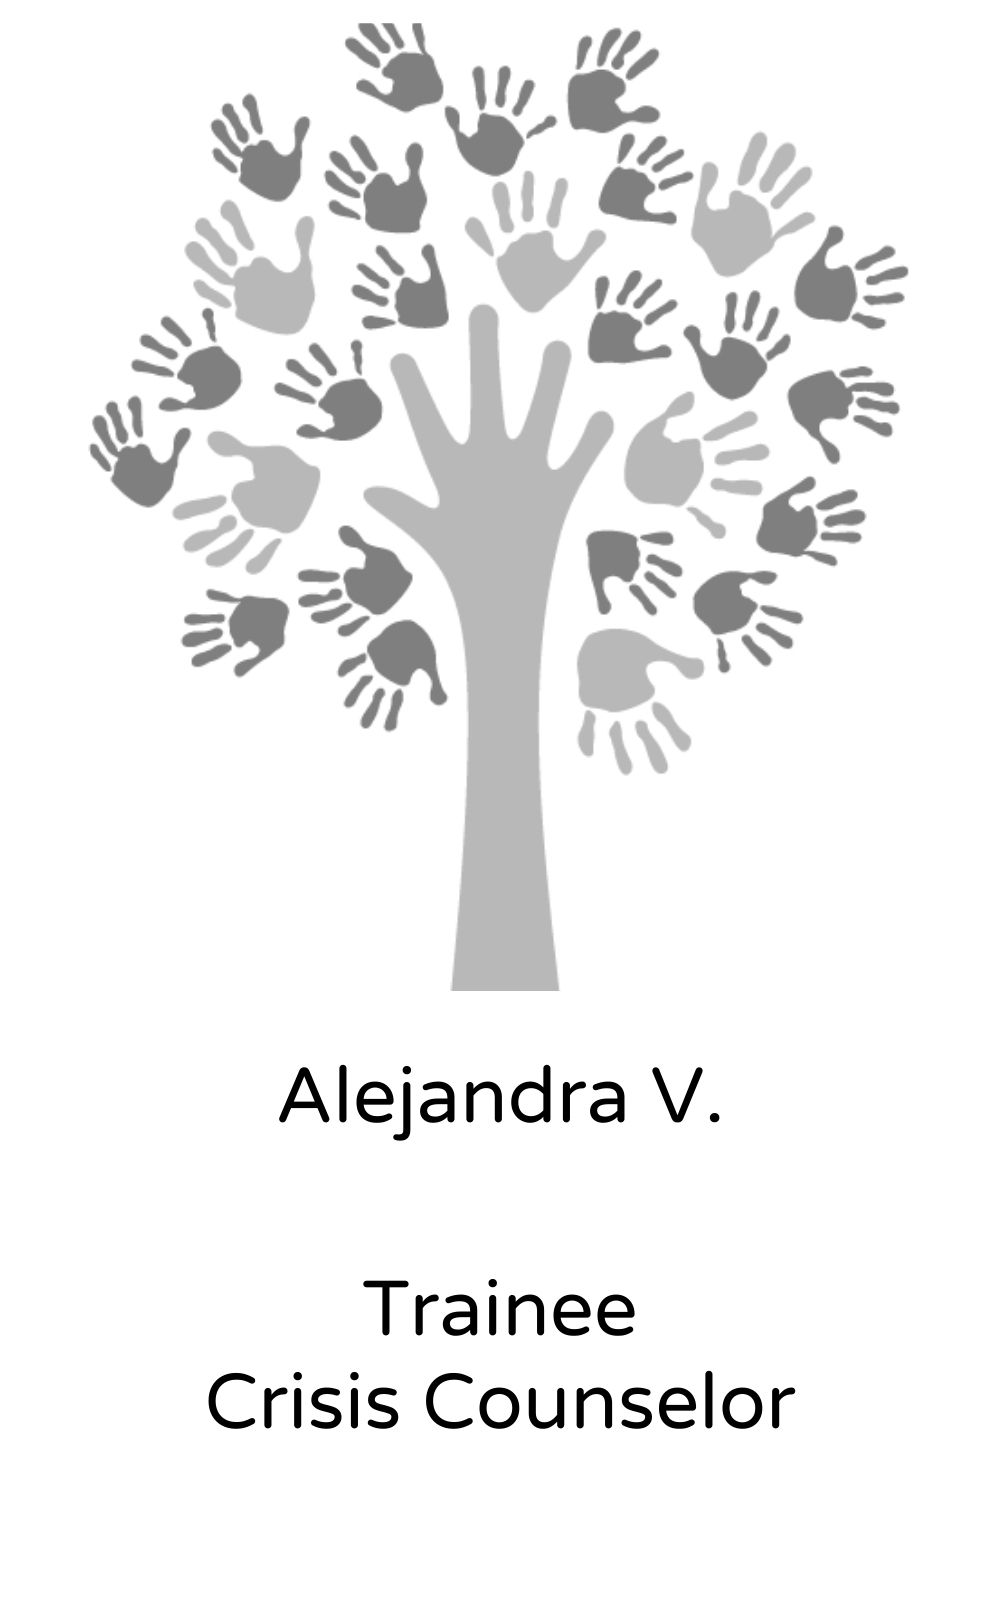 Alejandra V, Trainee, Crisis Counselor